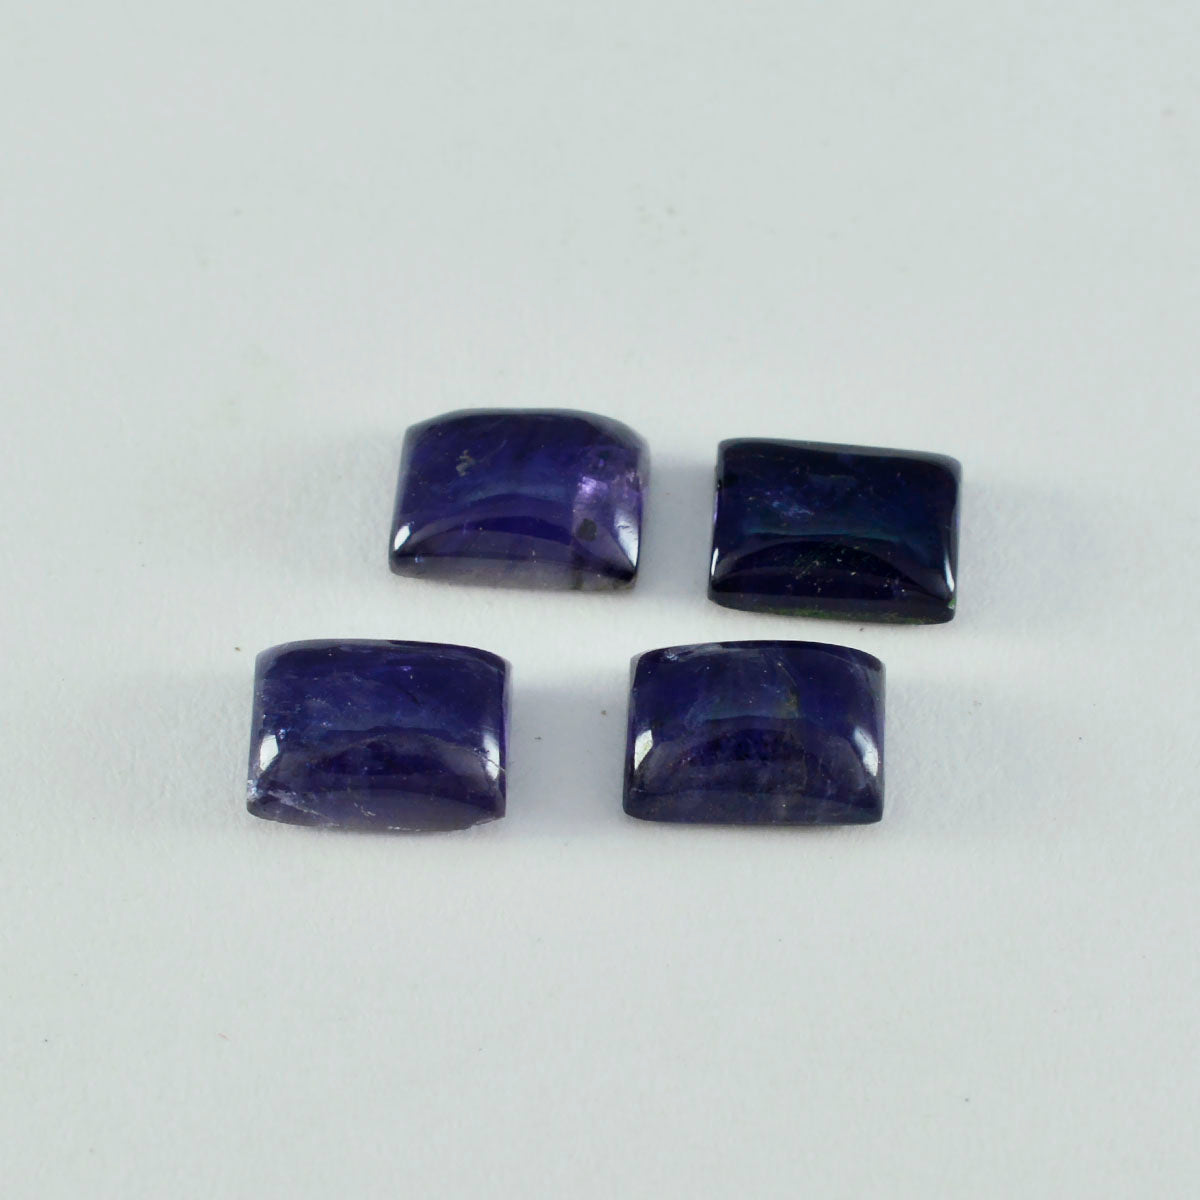 Riyogems 1PC blauwe ioliet cabochon 8x10 mm achthoekige vorm A+ kwaliteit losse edelsteen